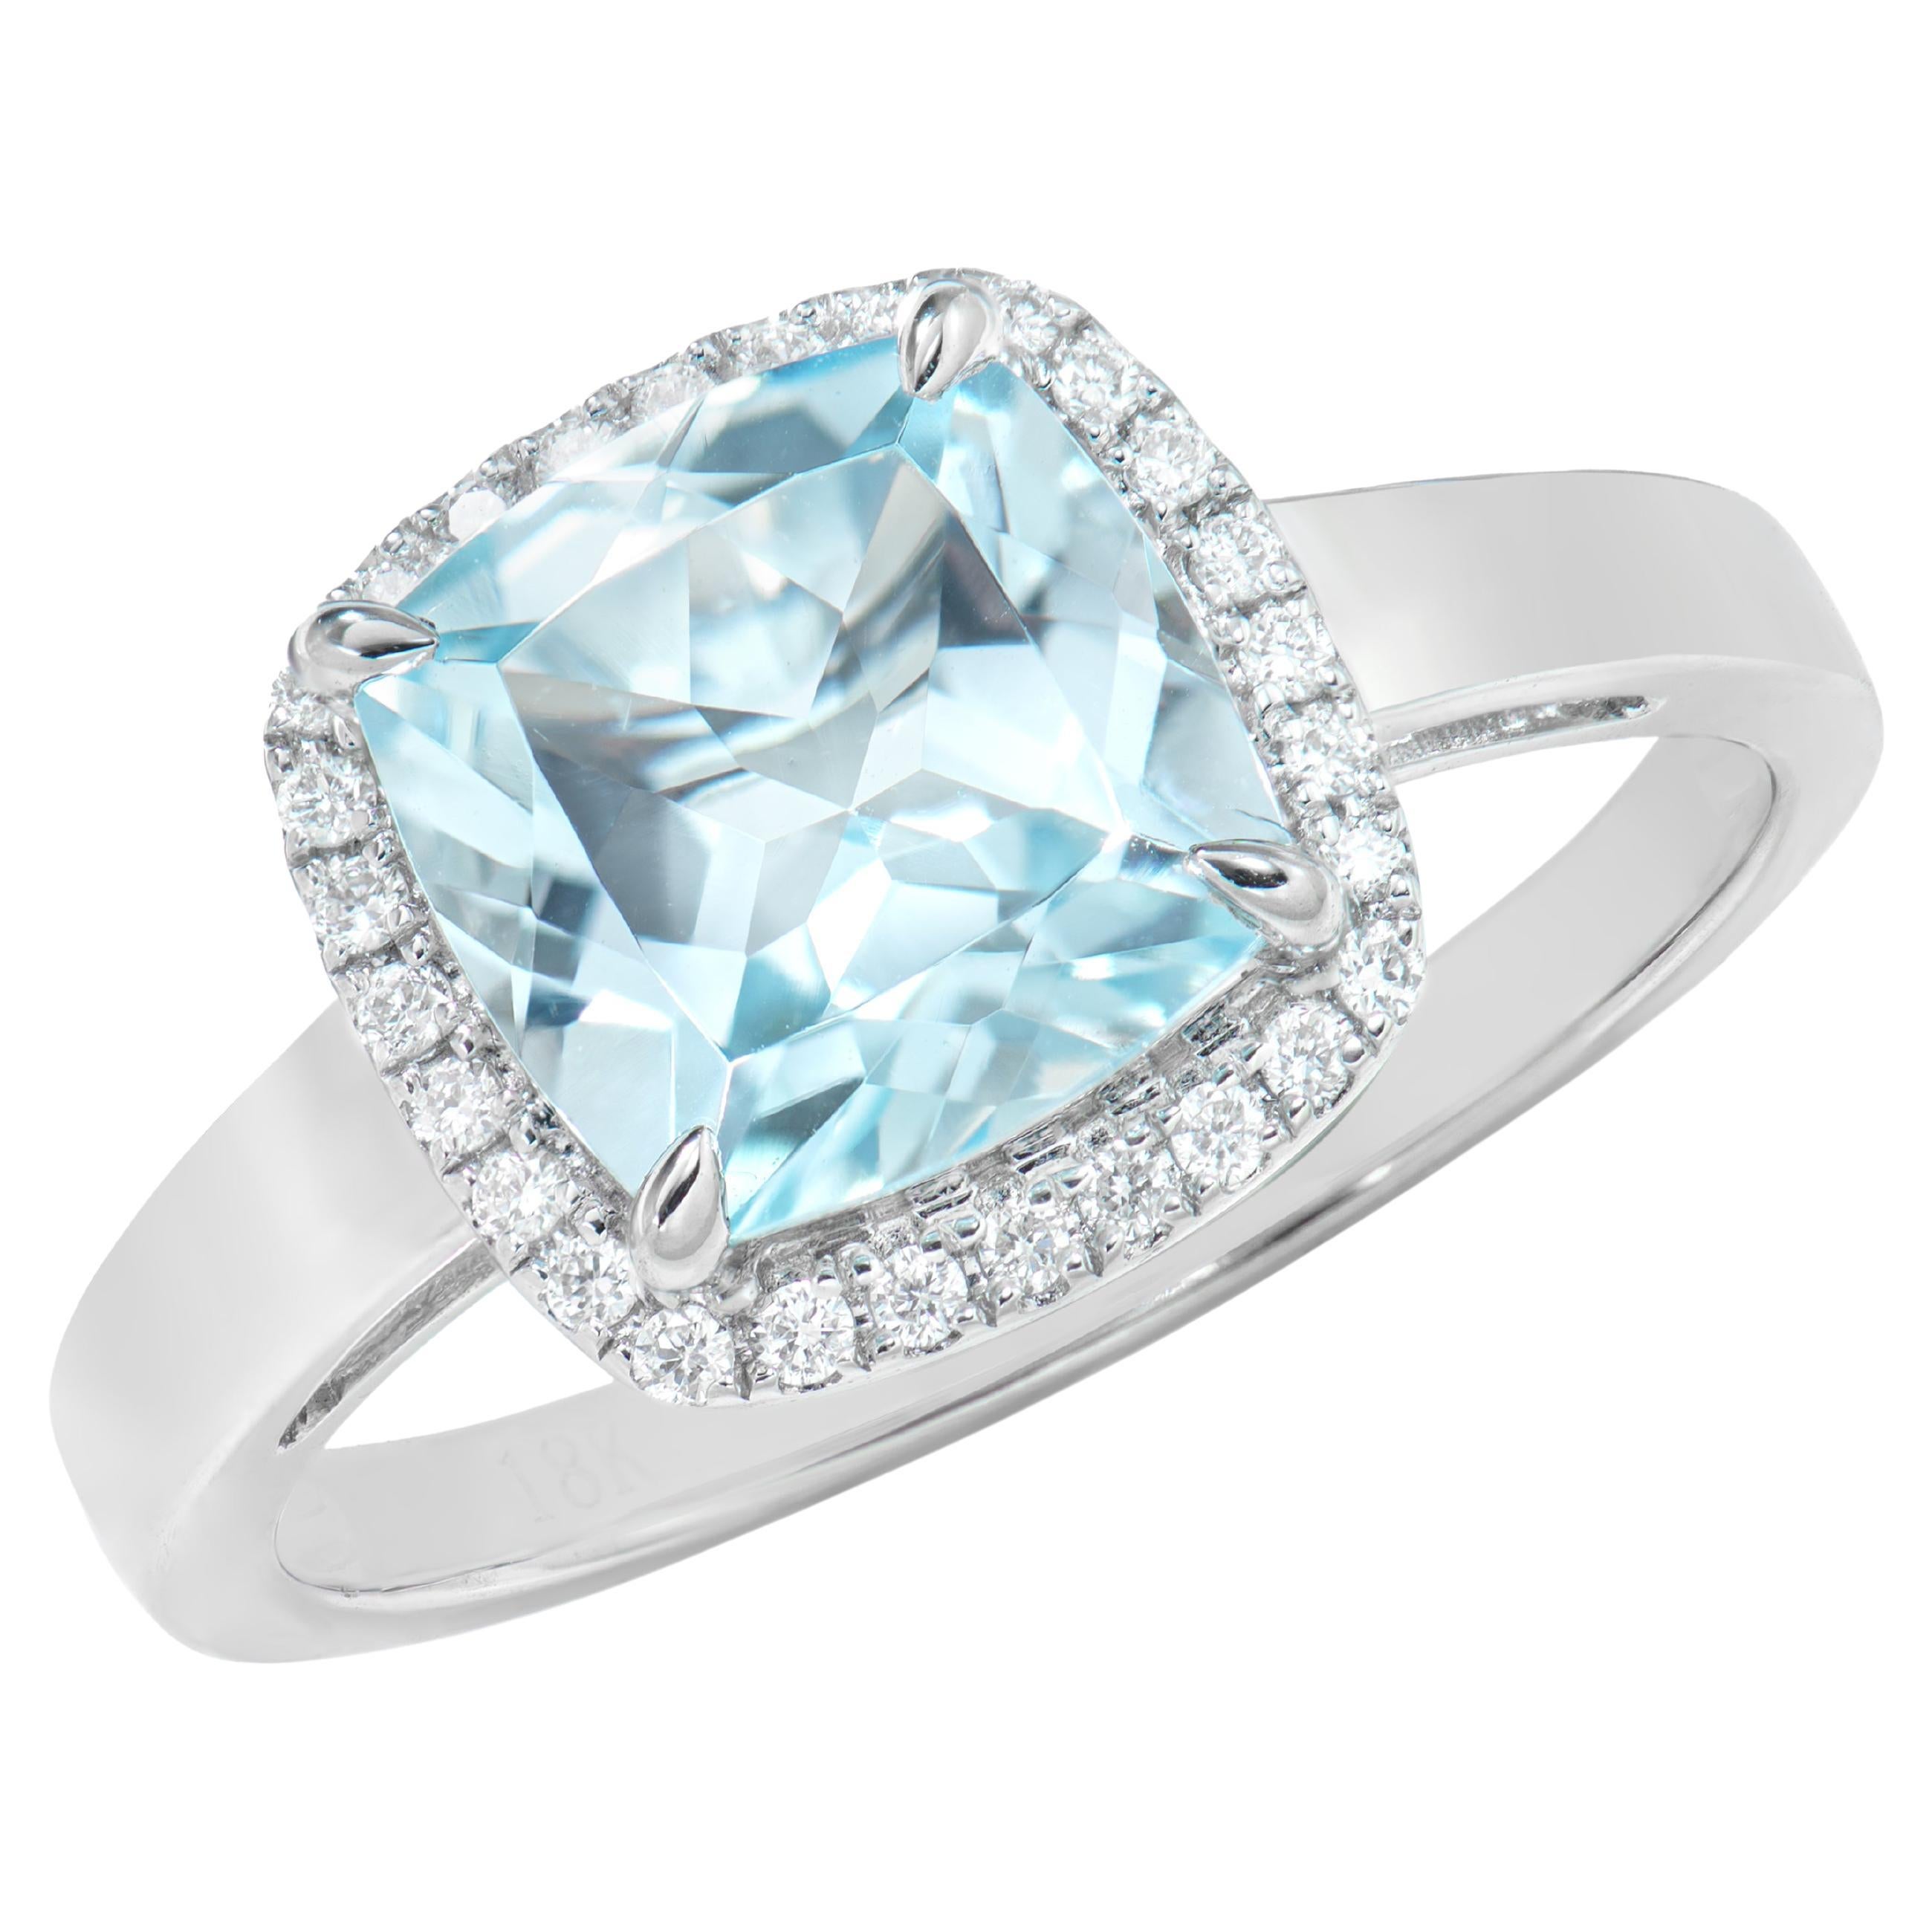 2.68 Carat Swiss Blue Topaz Fancy Ring in 18Karat White Gold with White Diamond. For Sale